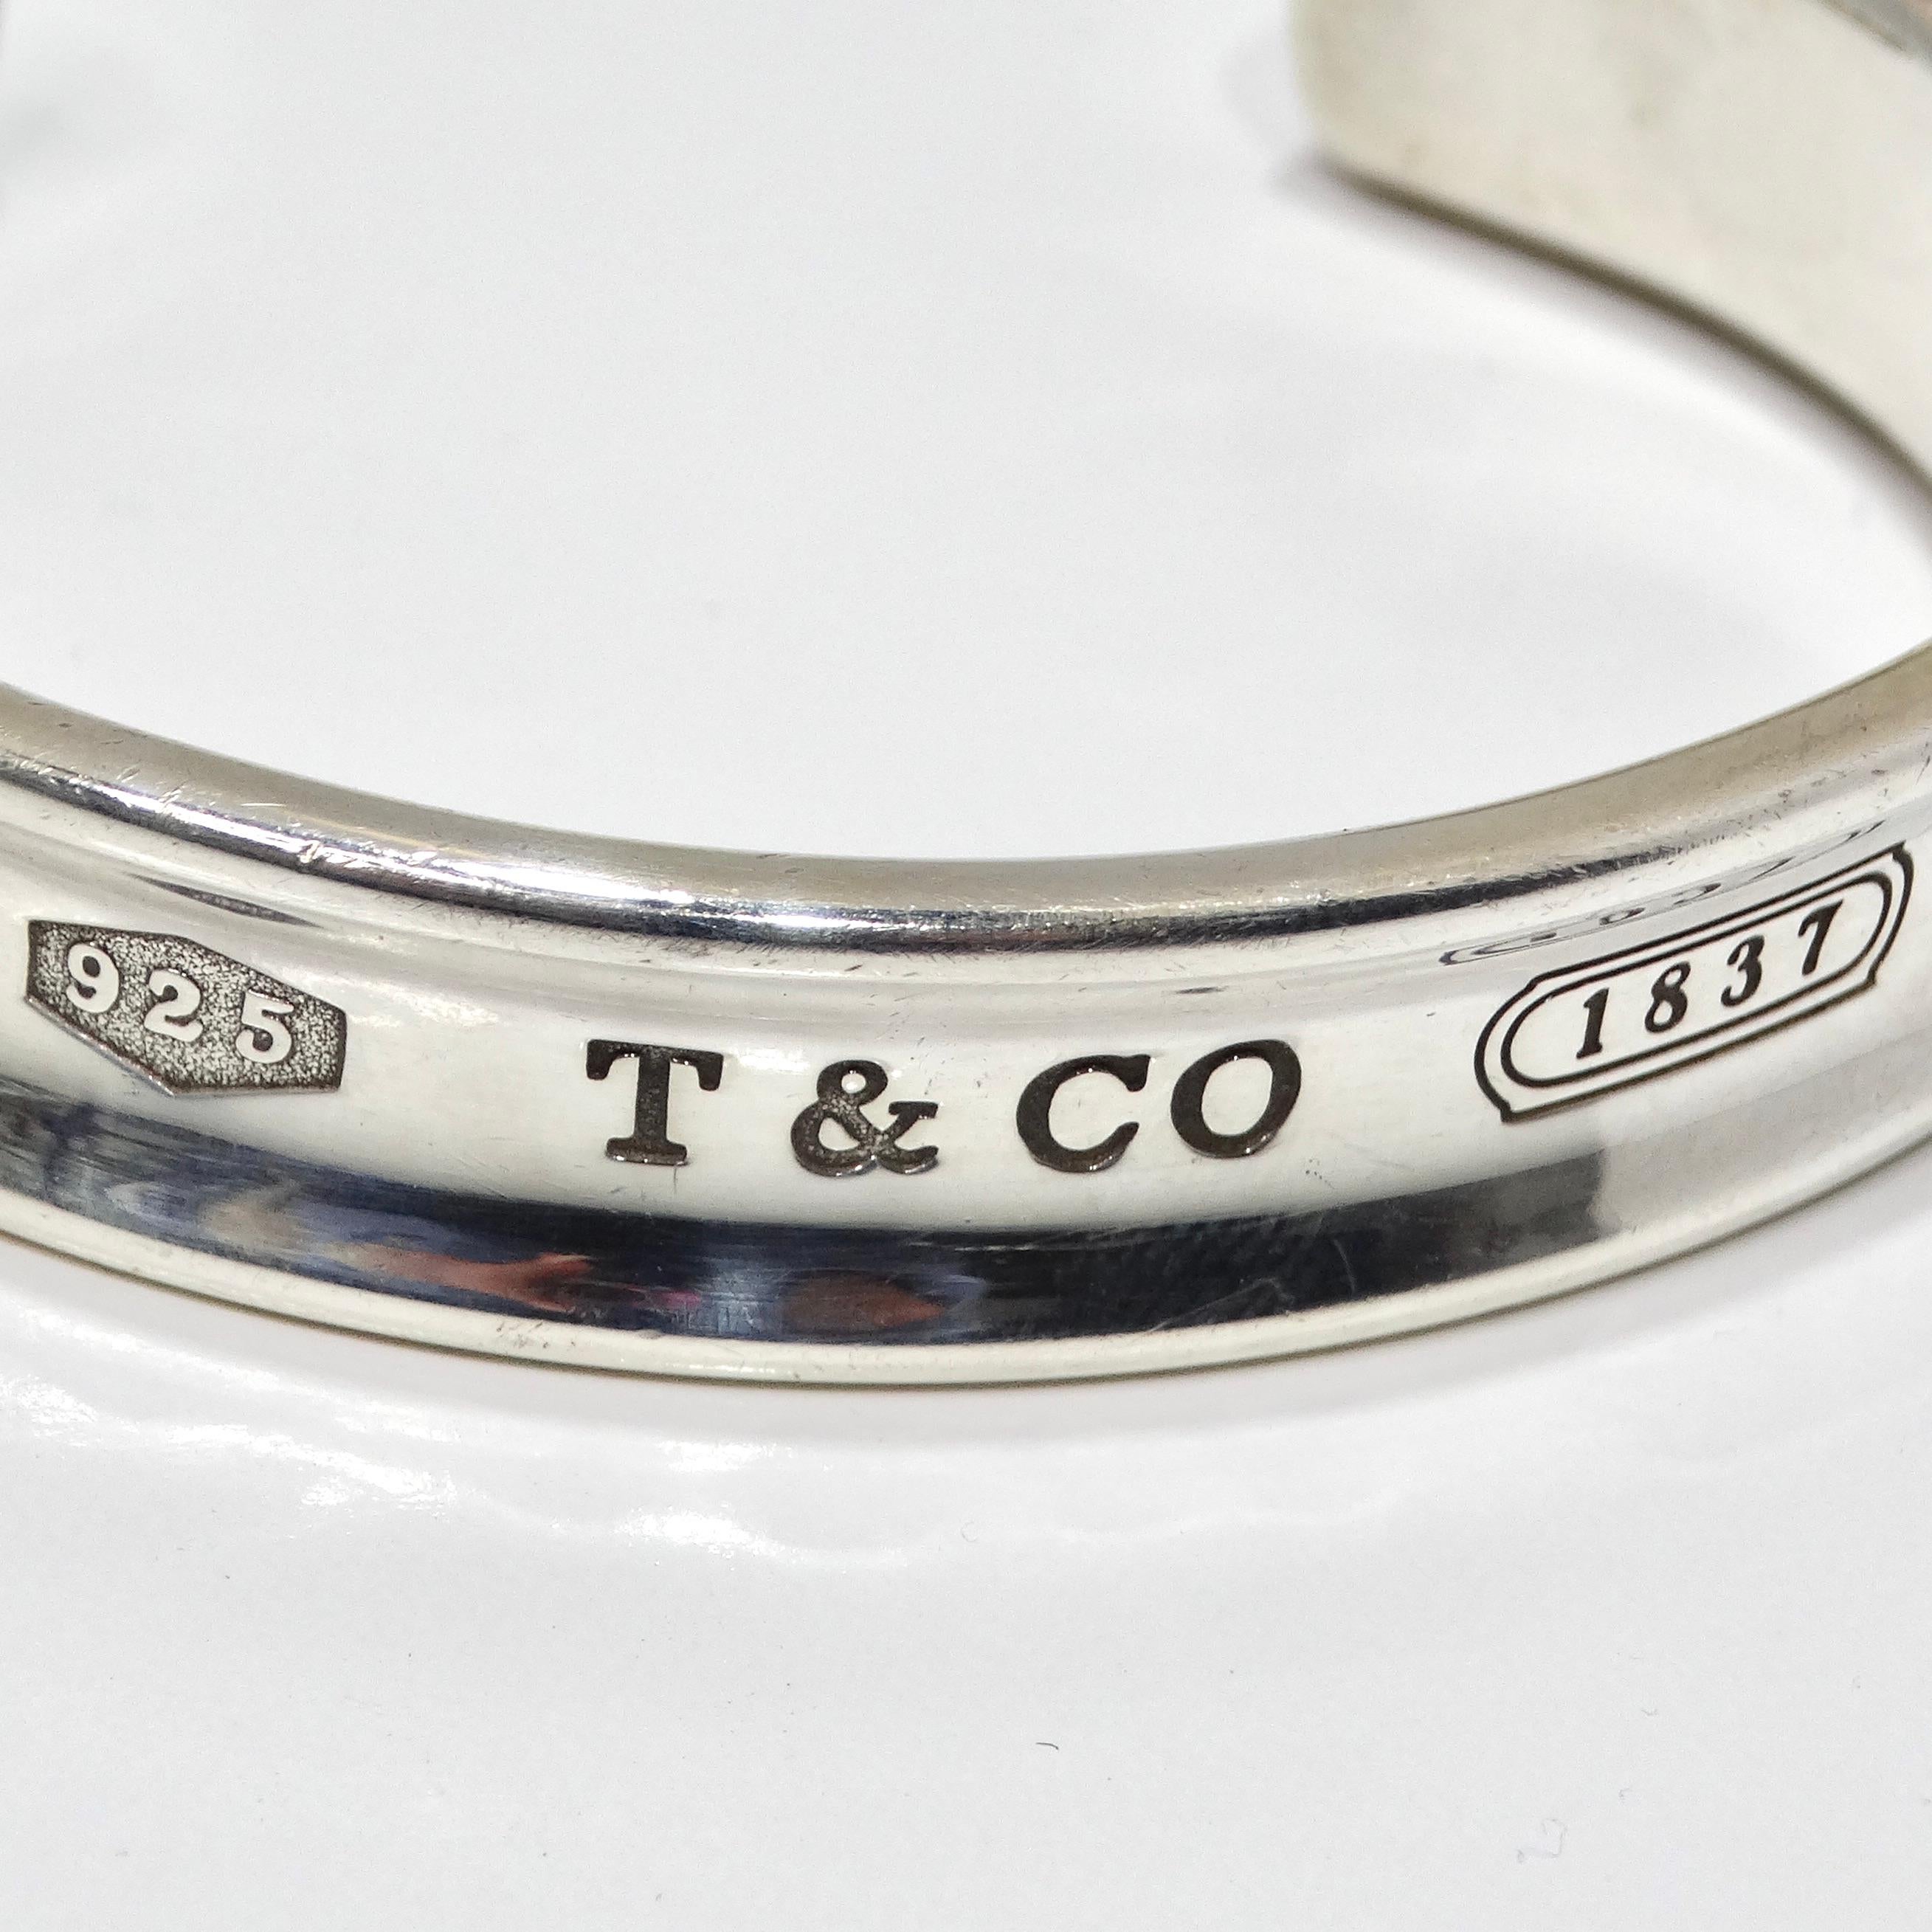 tiffany & co 1837 silver cuff bracelet